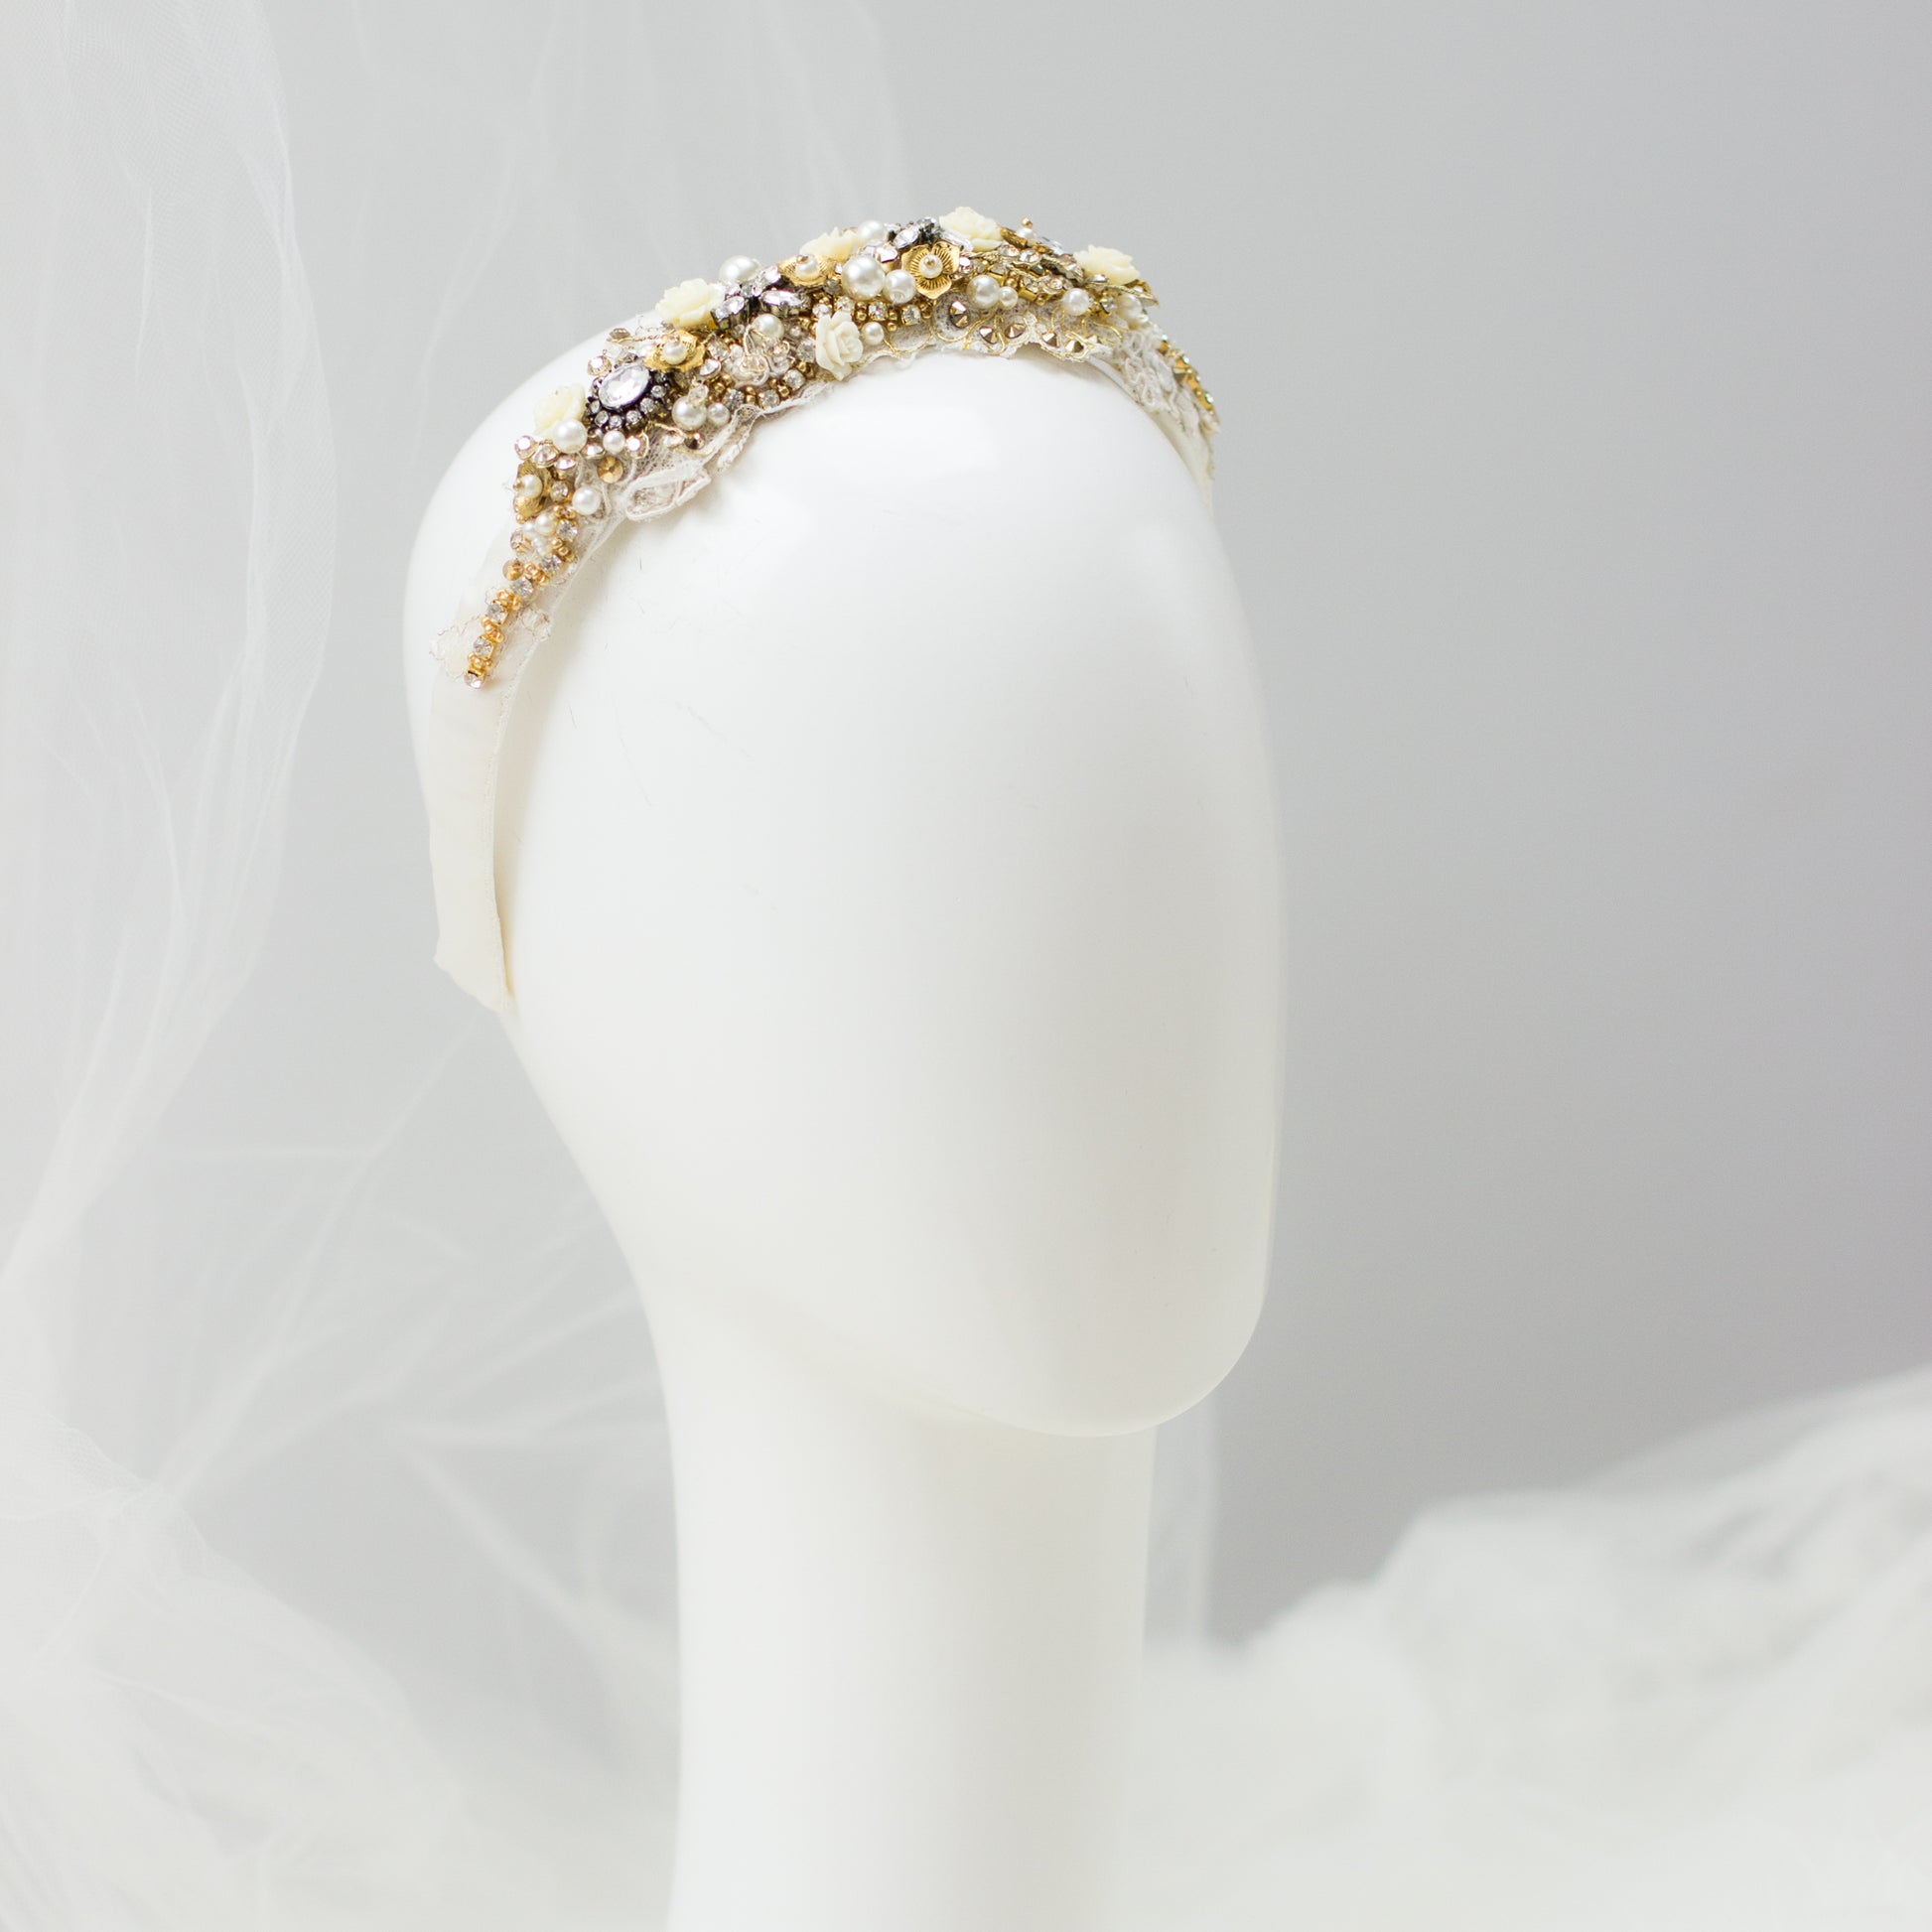 Handmade wedding accessories. Gold headband. Crystal headband. Bridal headpiece. Wedding hair accessories. Rhinestone hairpiece. Head fascinator. Lace headband. online bridal boutique.